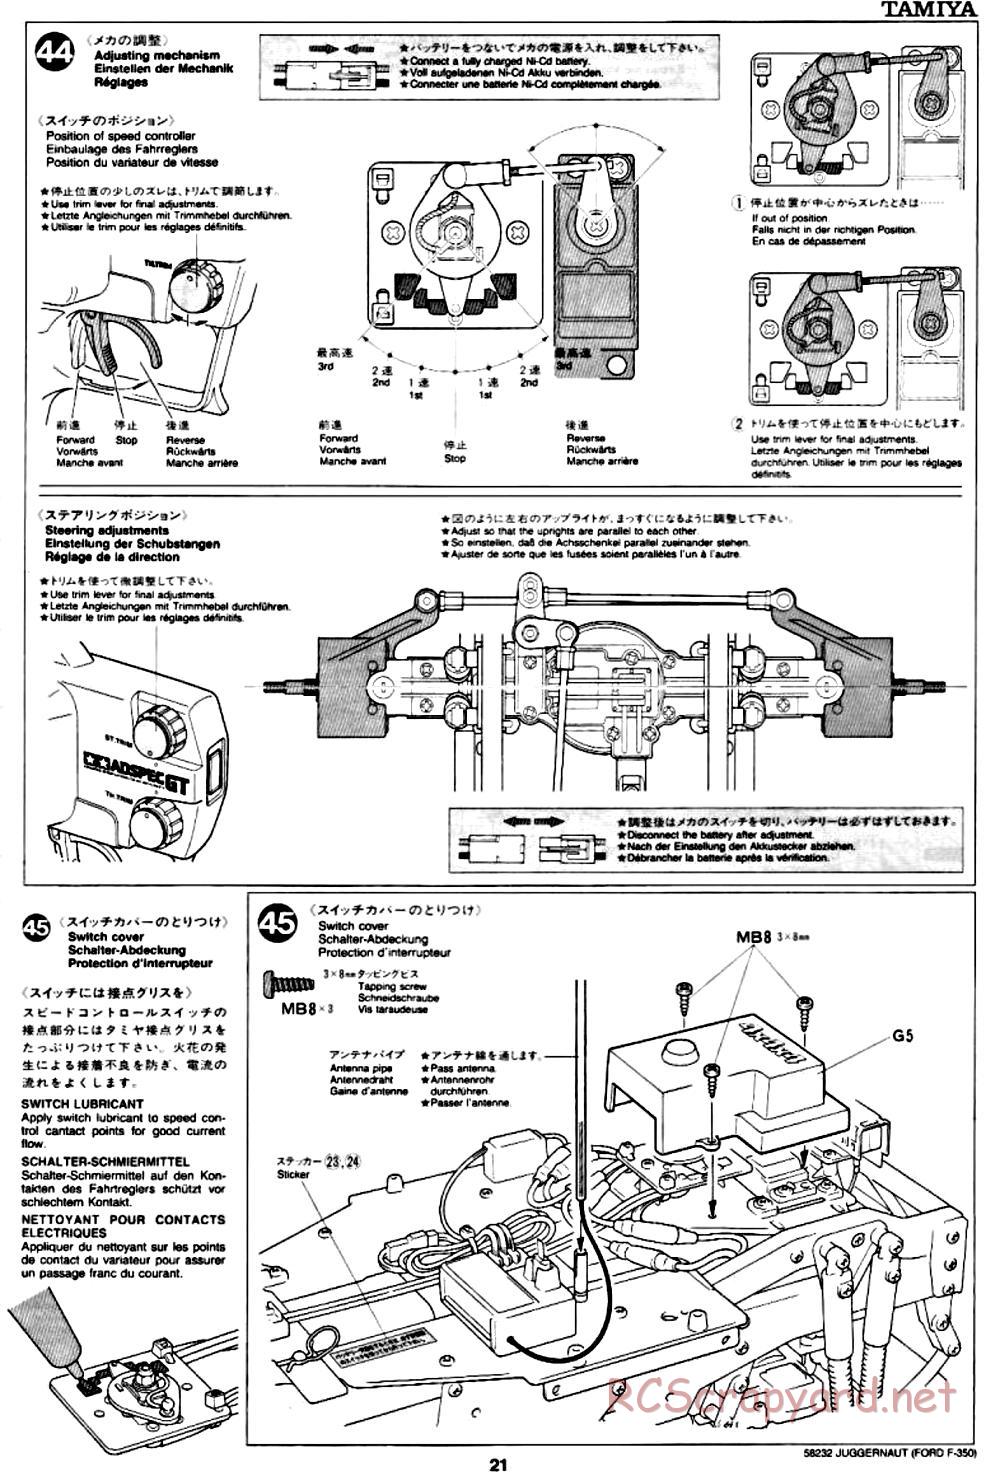 Tamiya - Juggernaut Chassis - Manual - Page 21